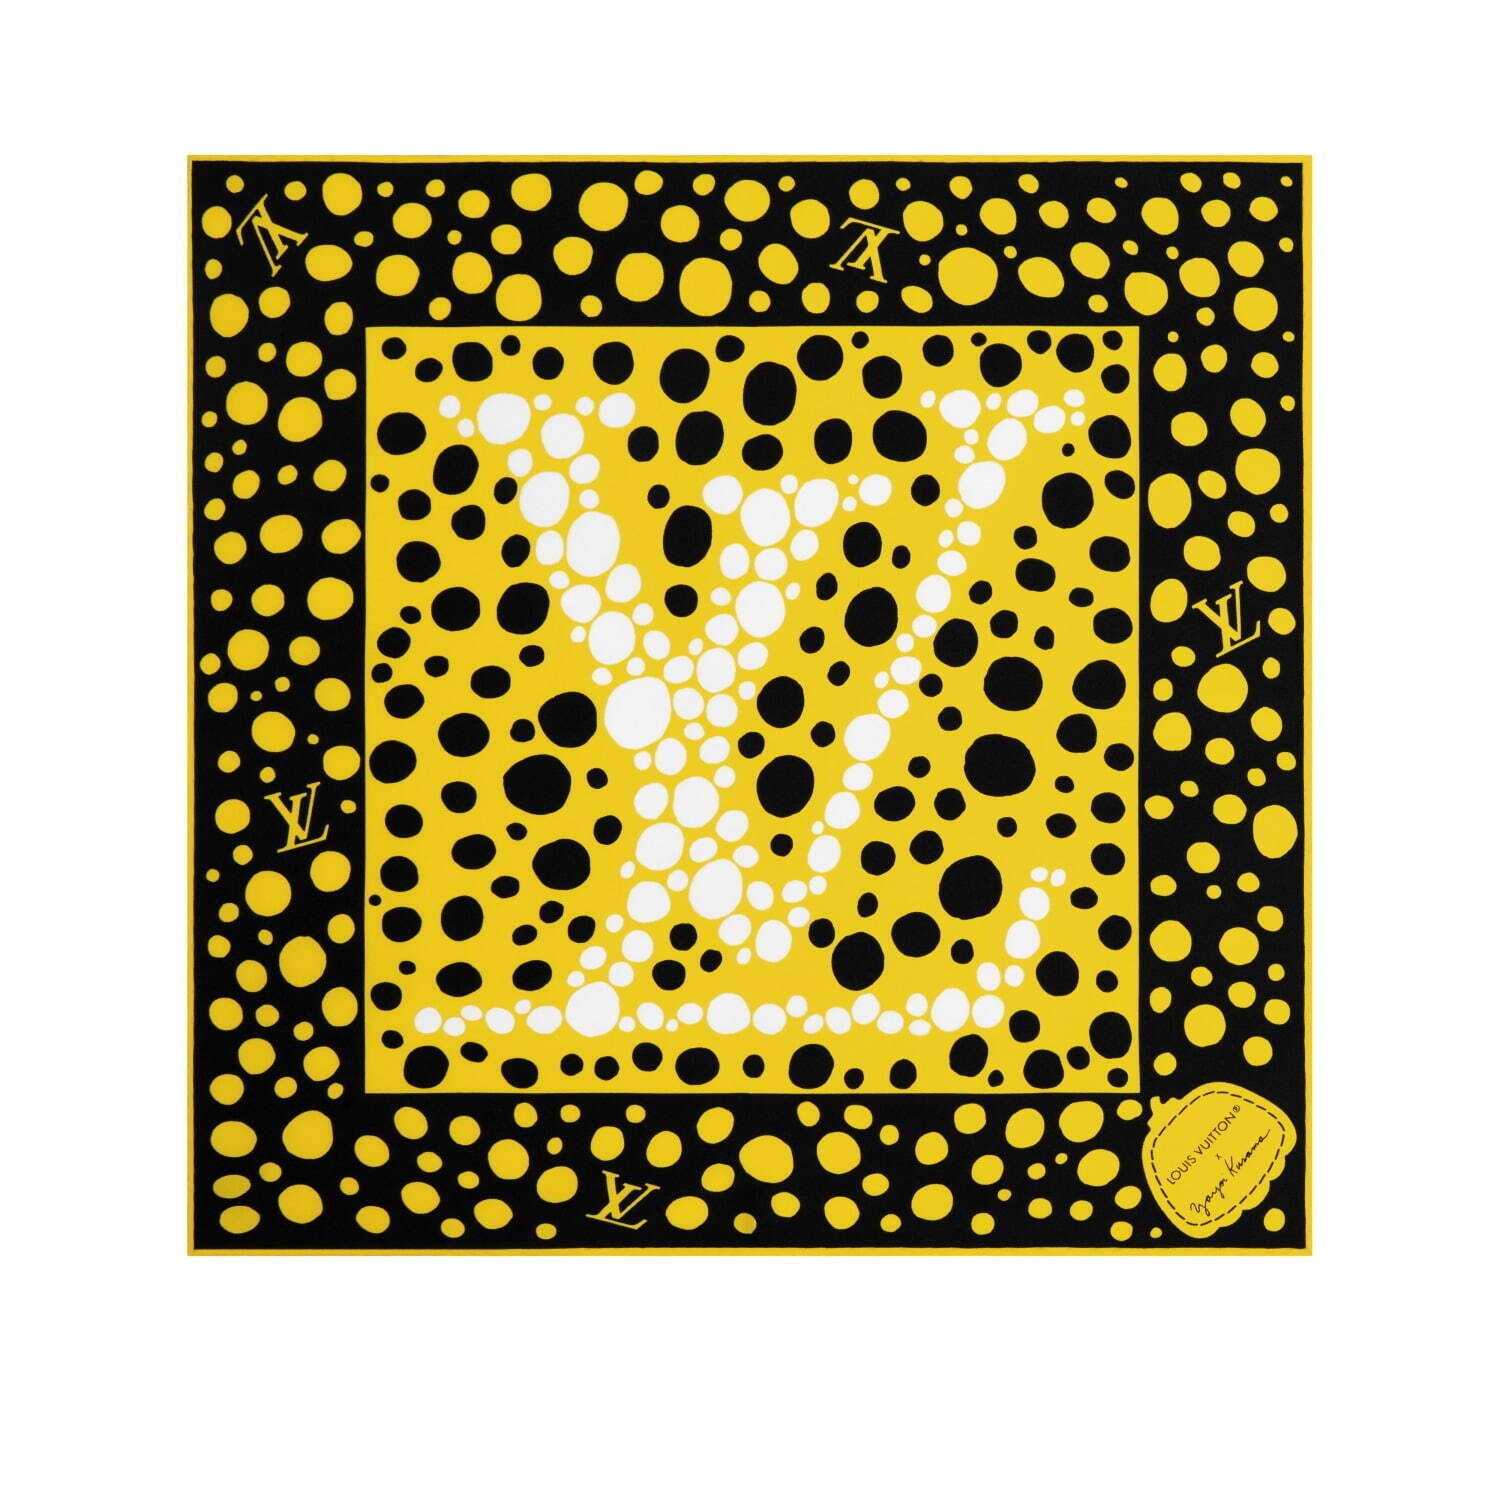 My favourite crossover Louis Vuitton 💫 Yayoi Drop two ❣️ Louis Vuitton  🙏🏻🇹🇭